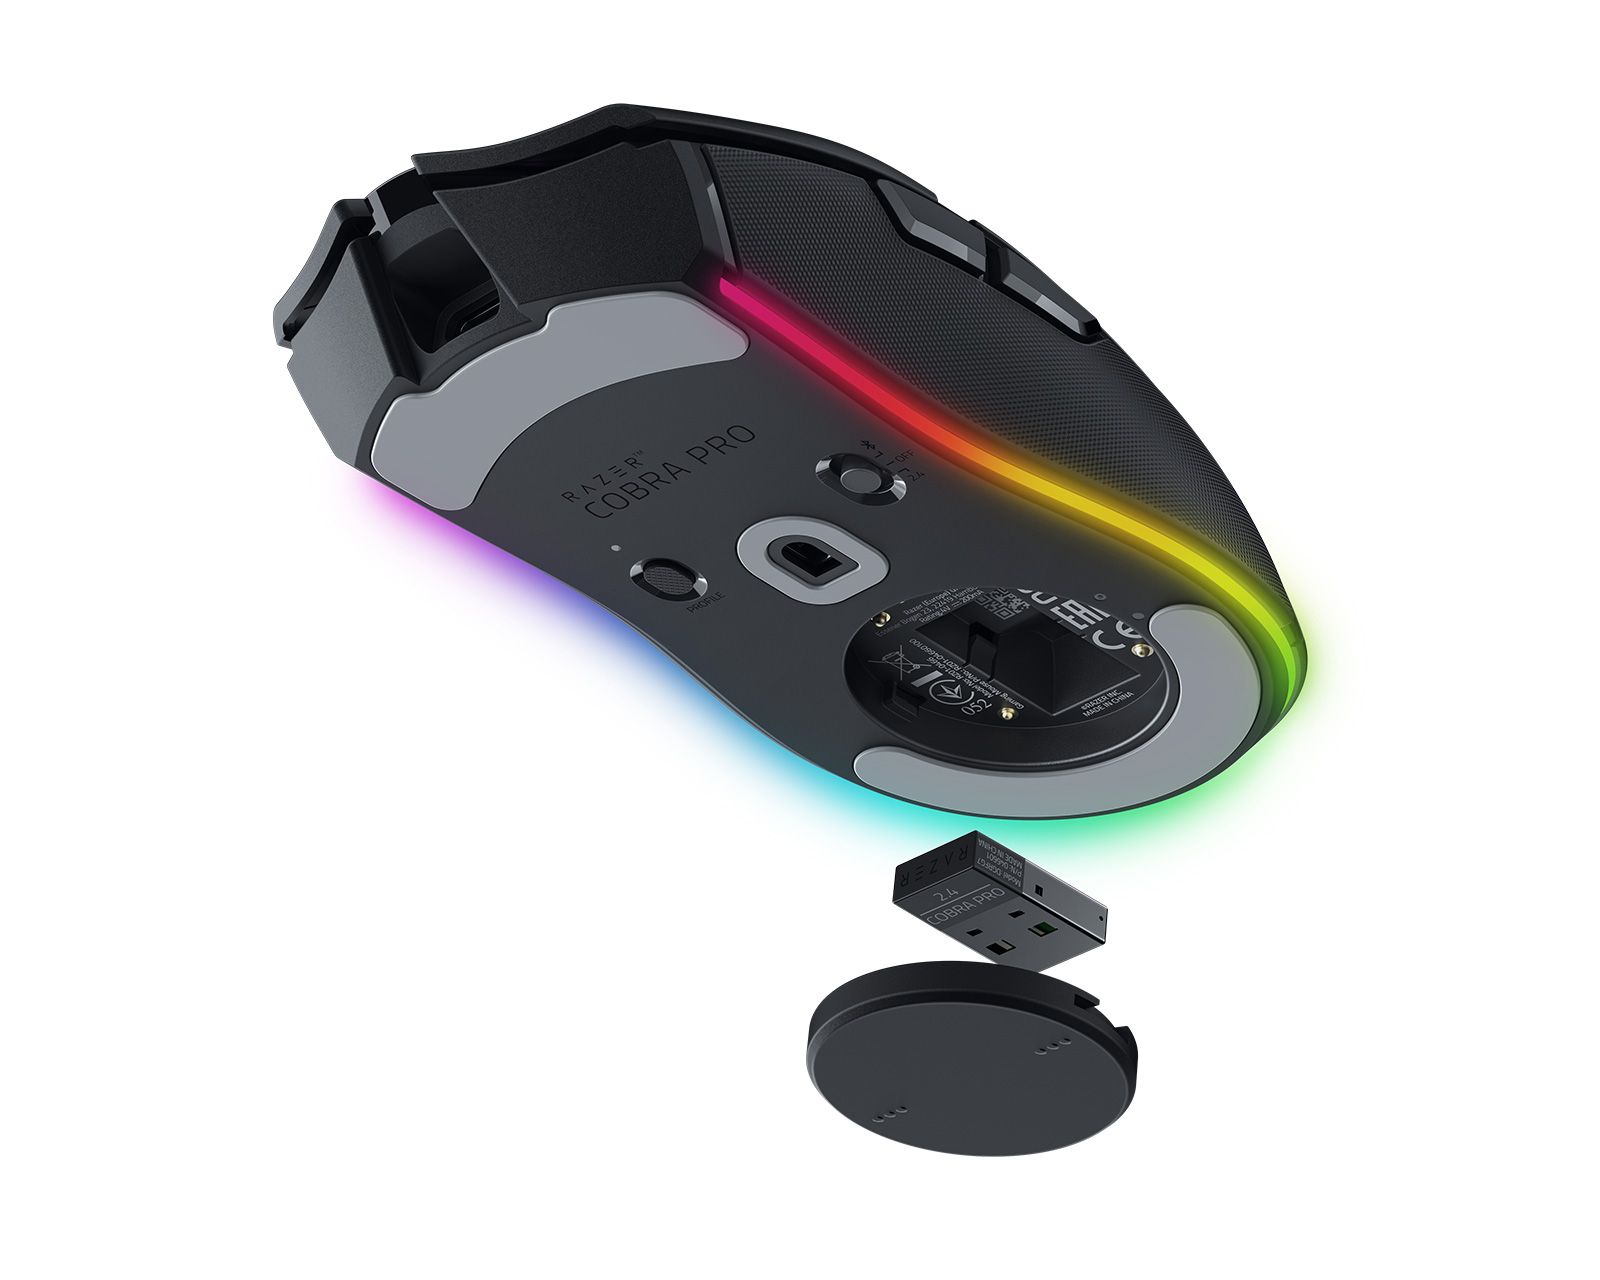 Razer Cobra Pro Wireless Gaming Mouse - Black